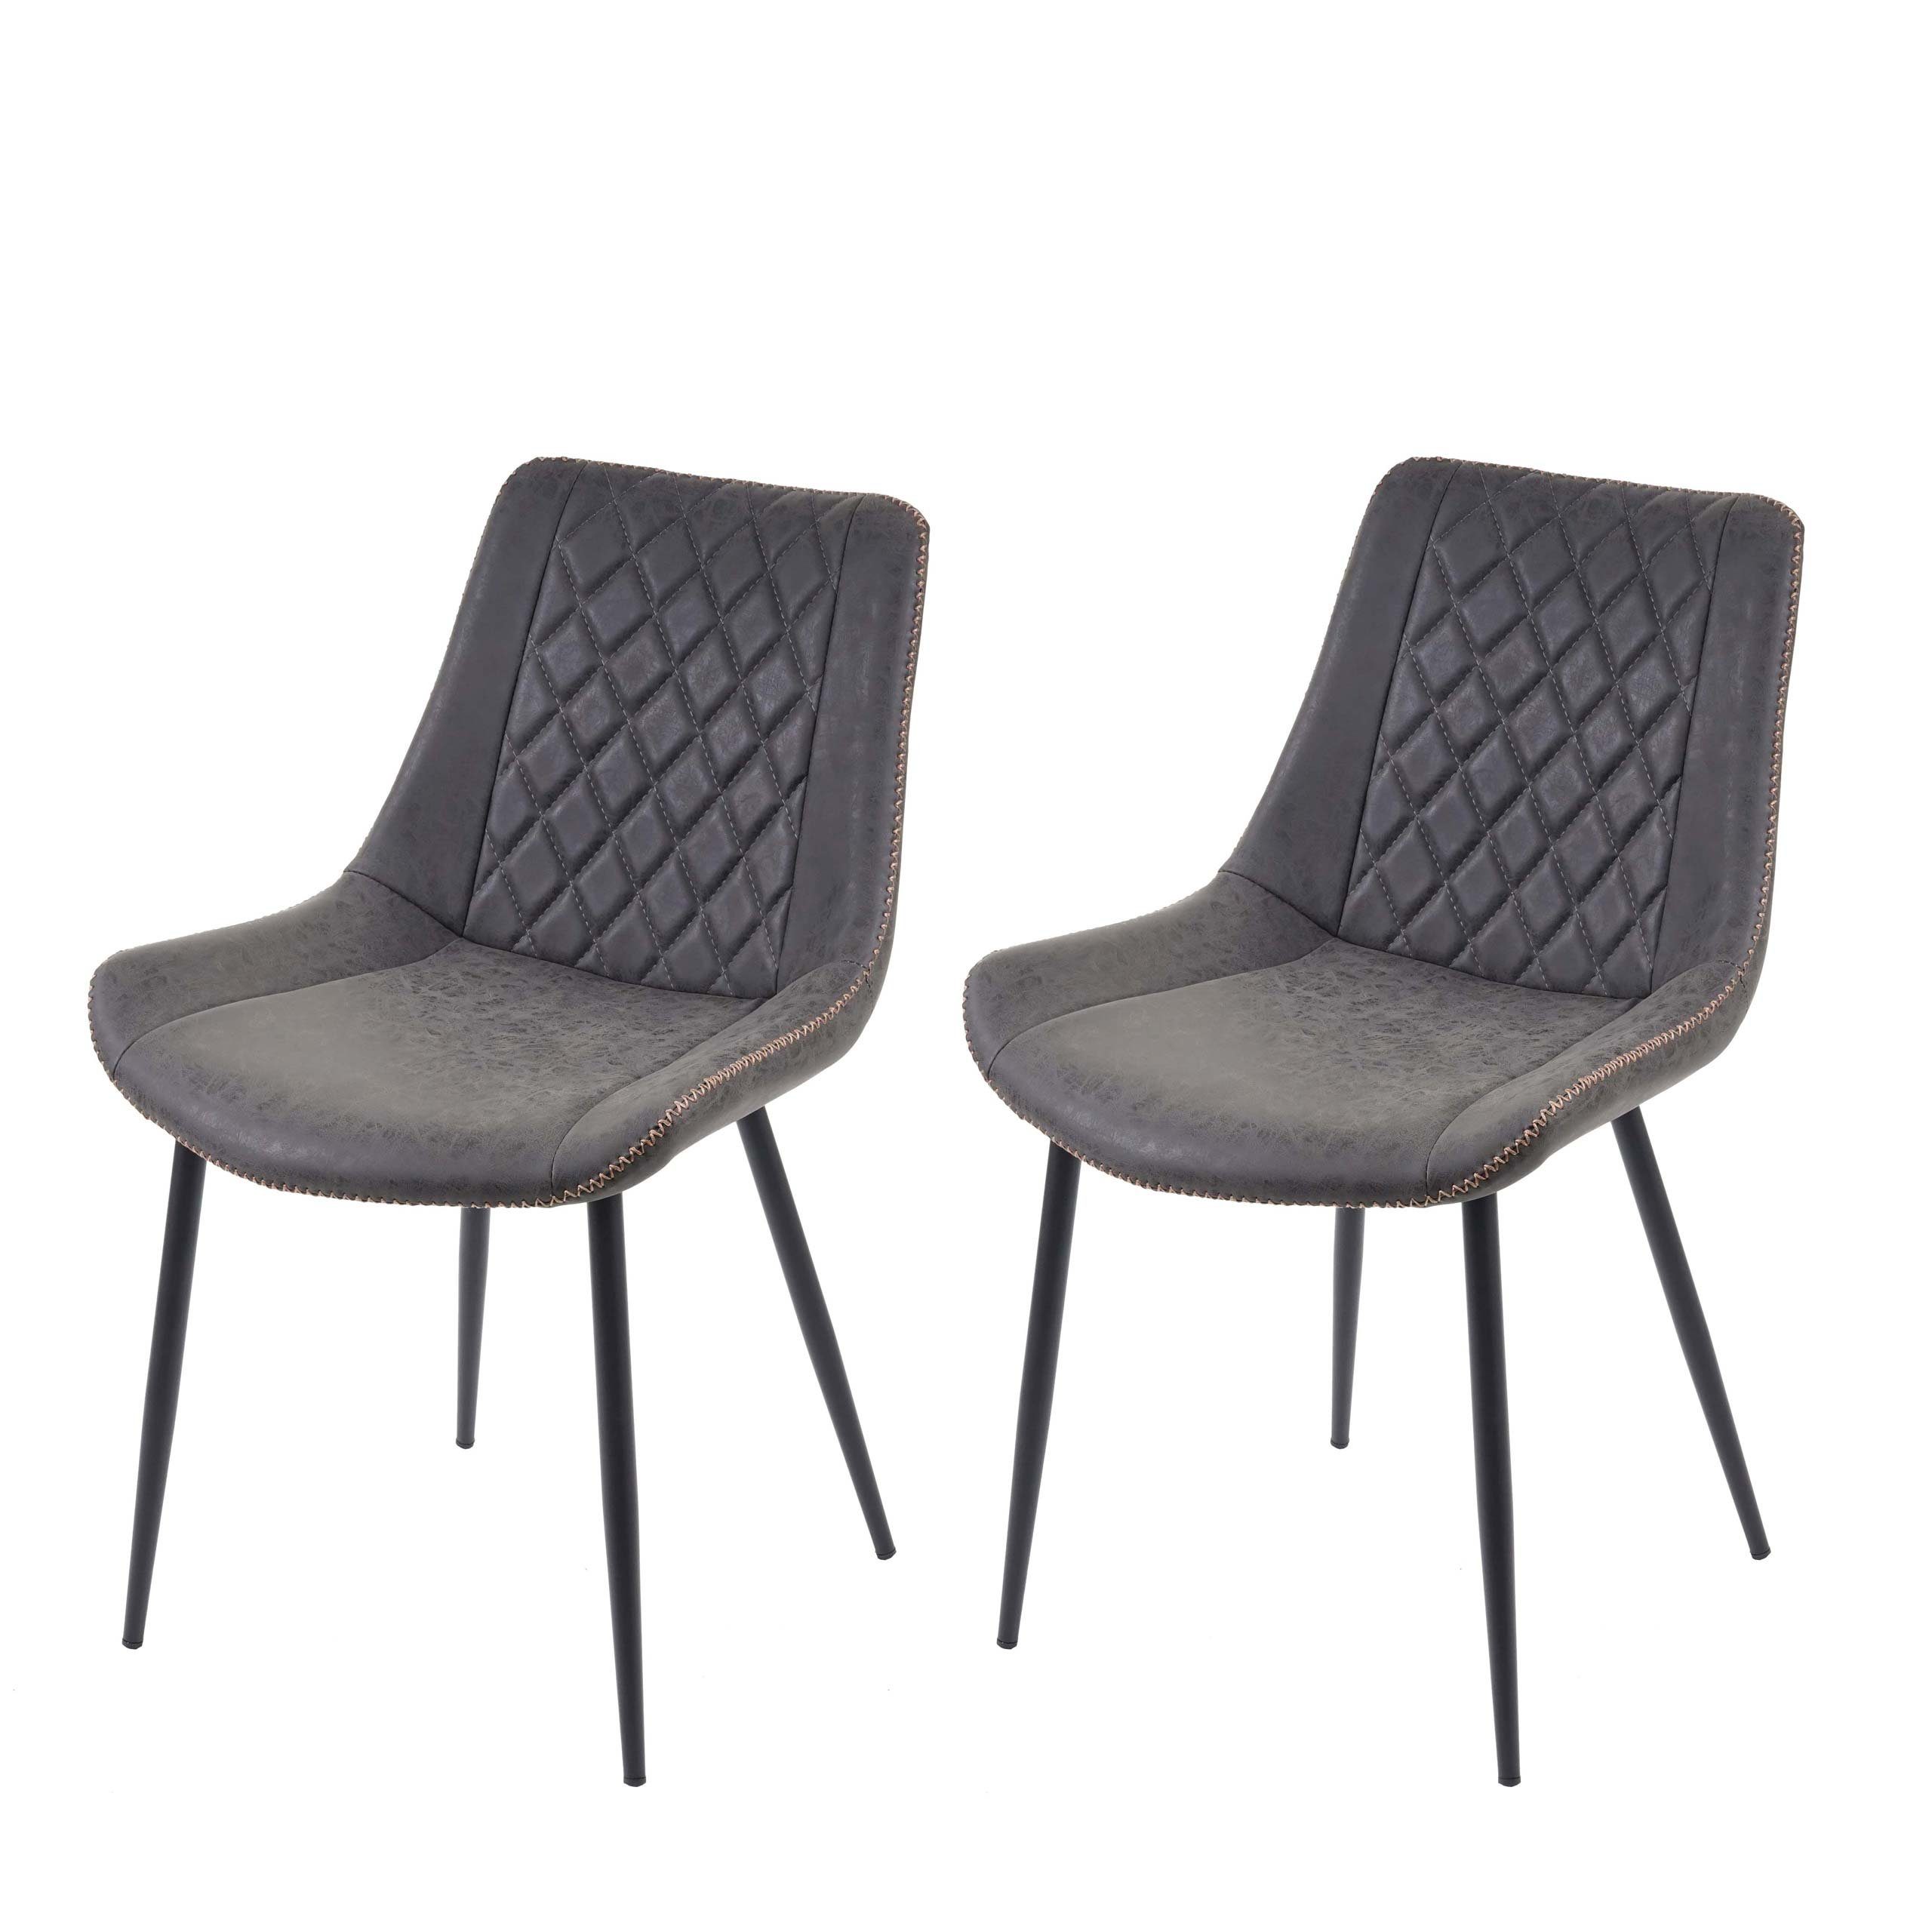 MCW Esszimmerstuhl MCW-E56-2 (Set, 2 St), 2er-Set, Inklusive Fußbodenschoner, dekorative glänzende Ziernaht wildlederimitat dunkelgrau | grau | Stühle